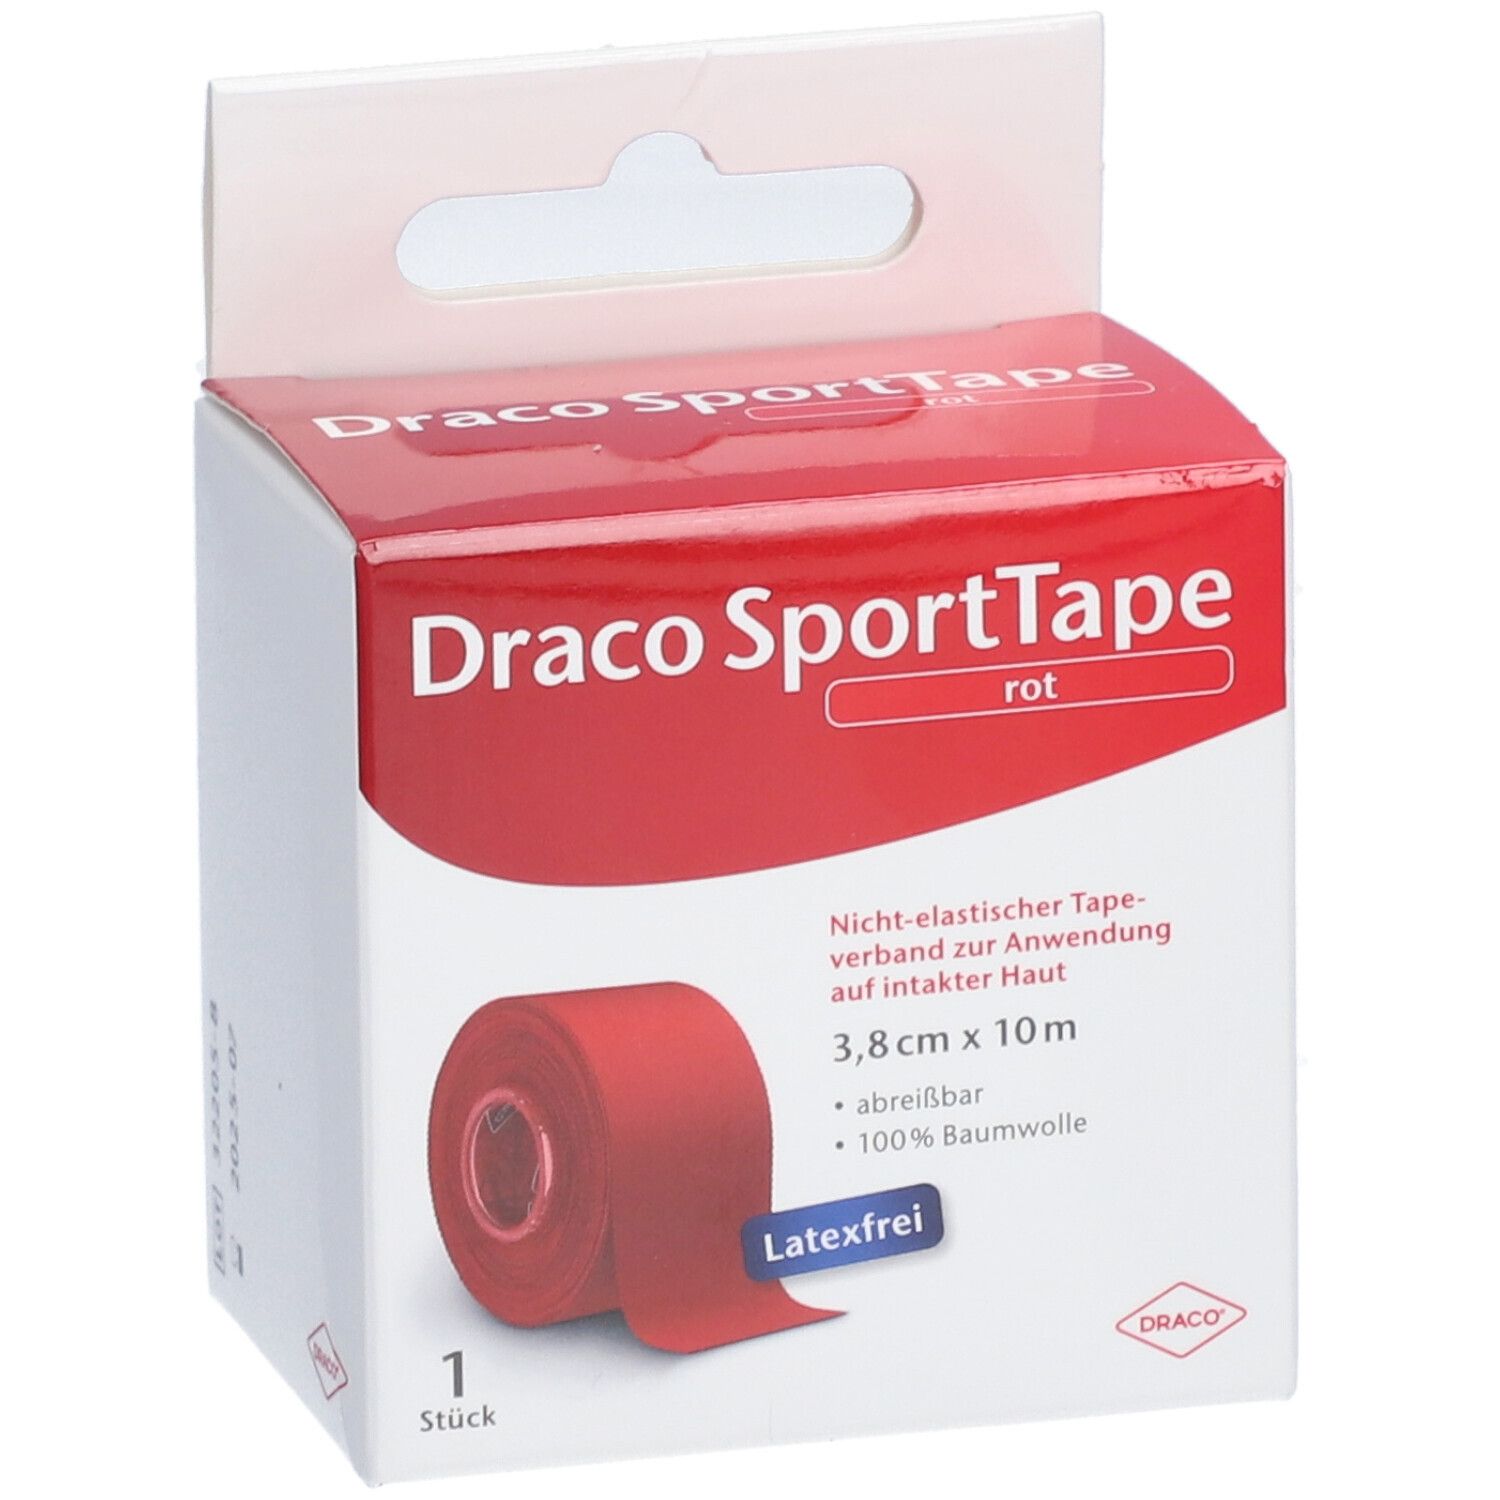 Draco SportTape 3,8 cm x 10 m rot